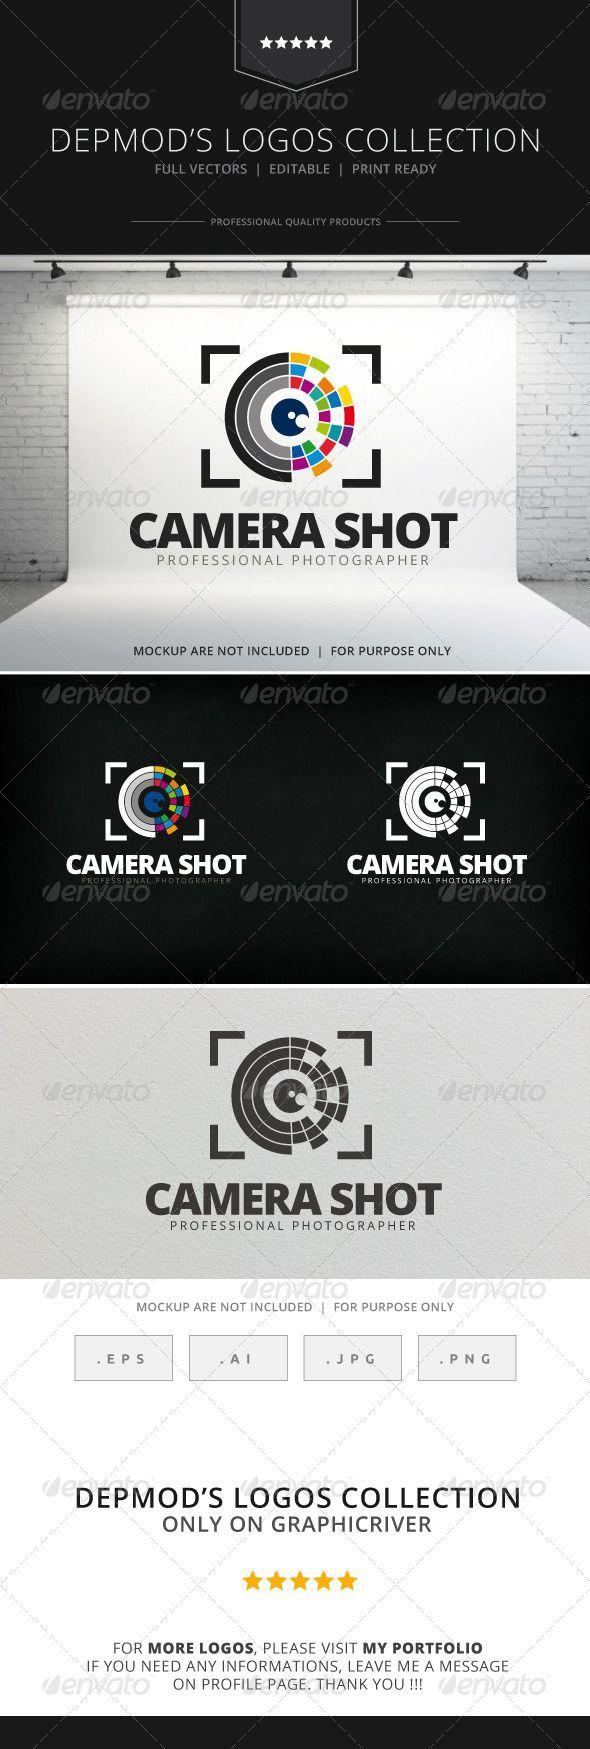 Colorful Camera Shutter Logo - Logo of a stylized colorful camera shutter (with framing). Full